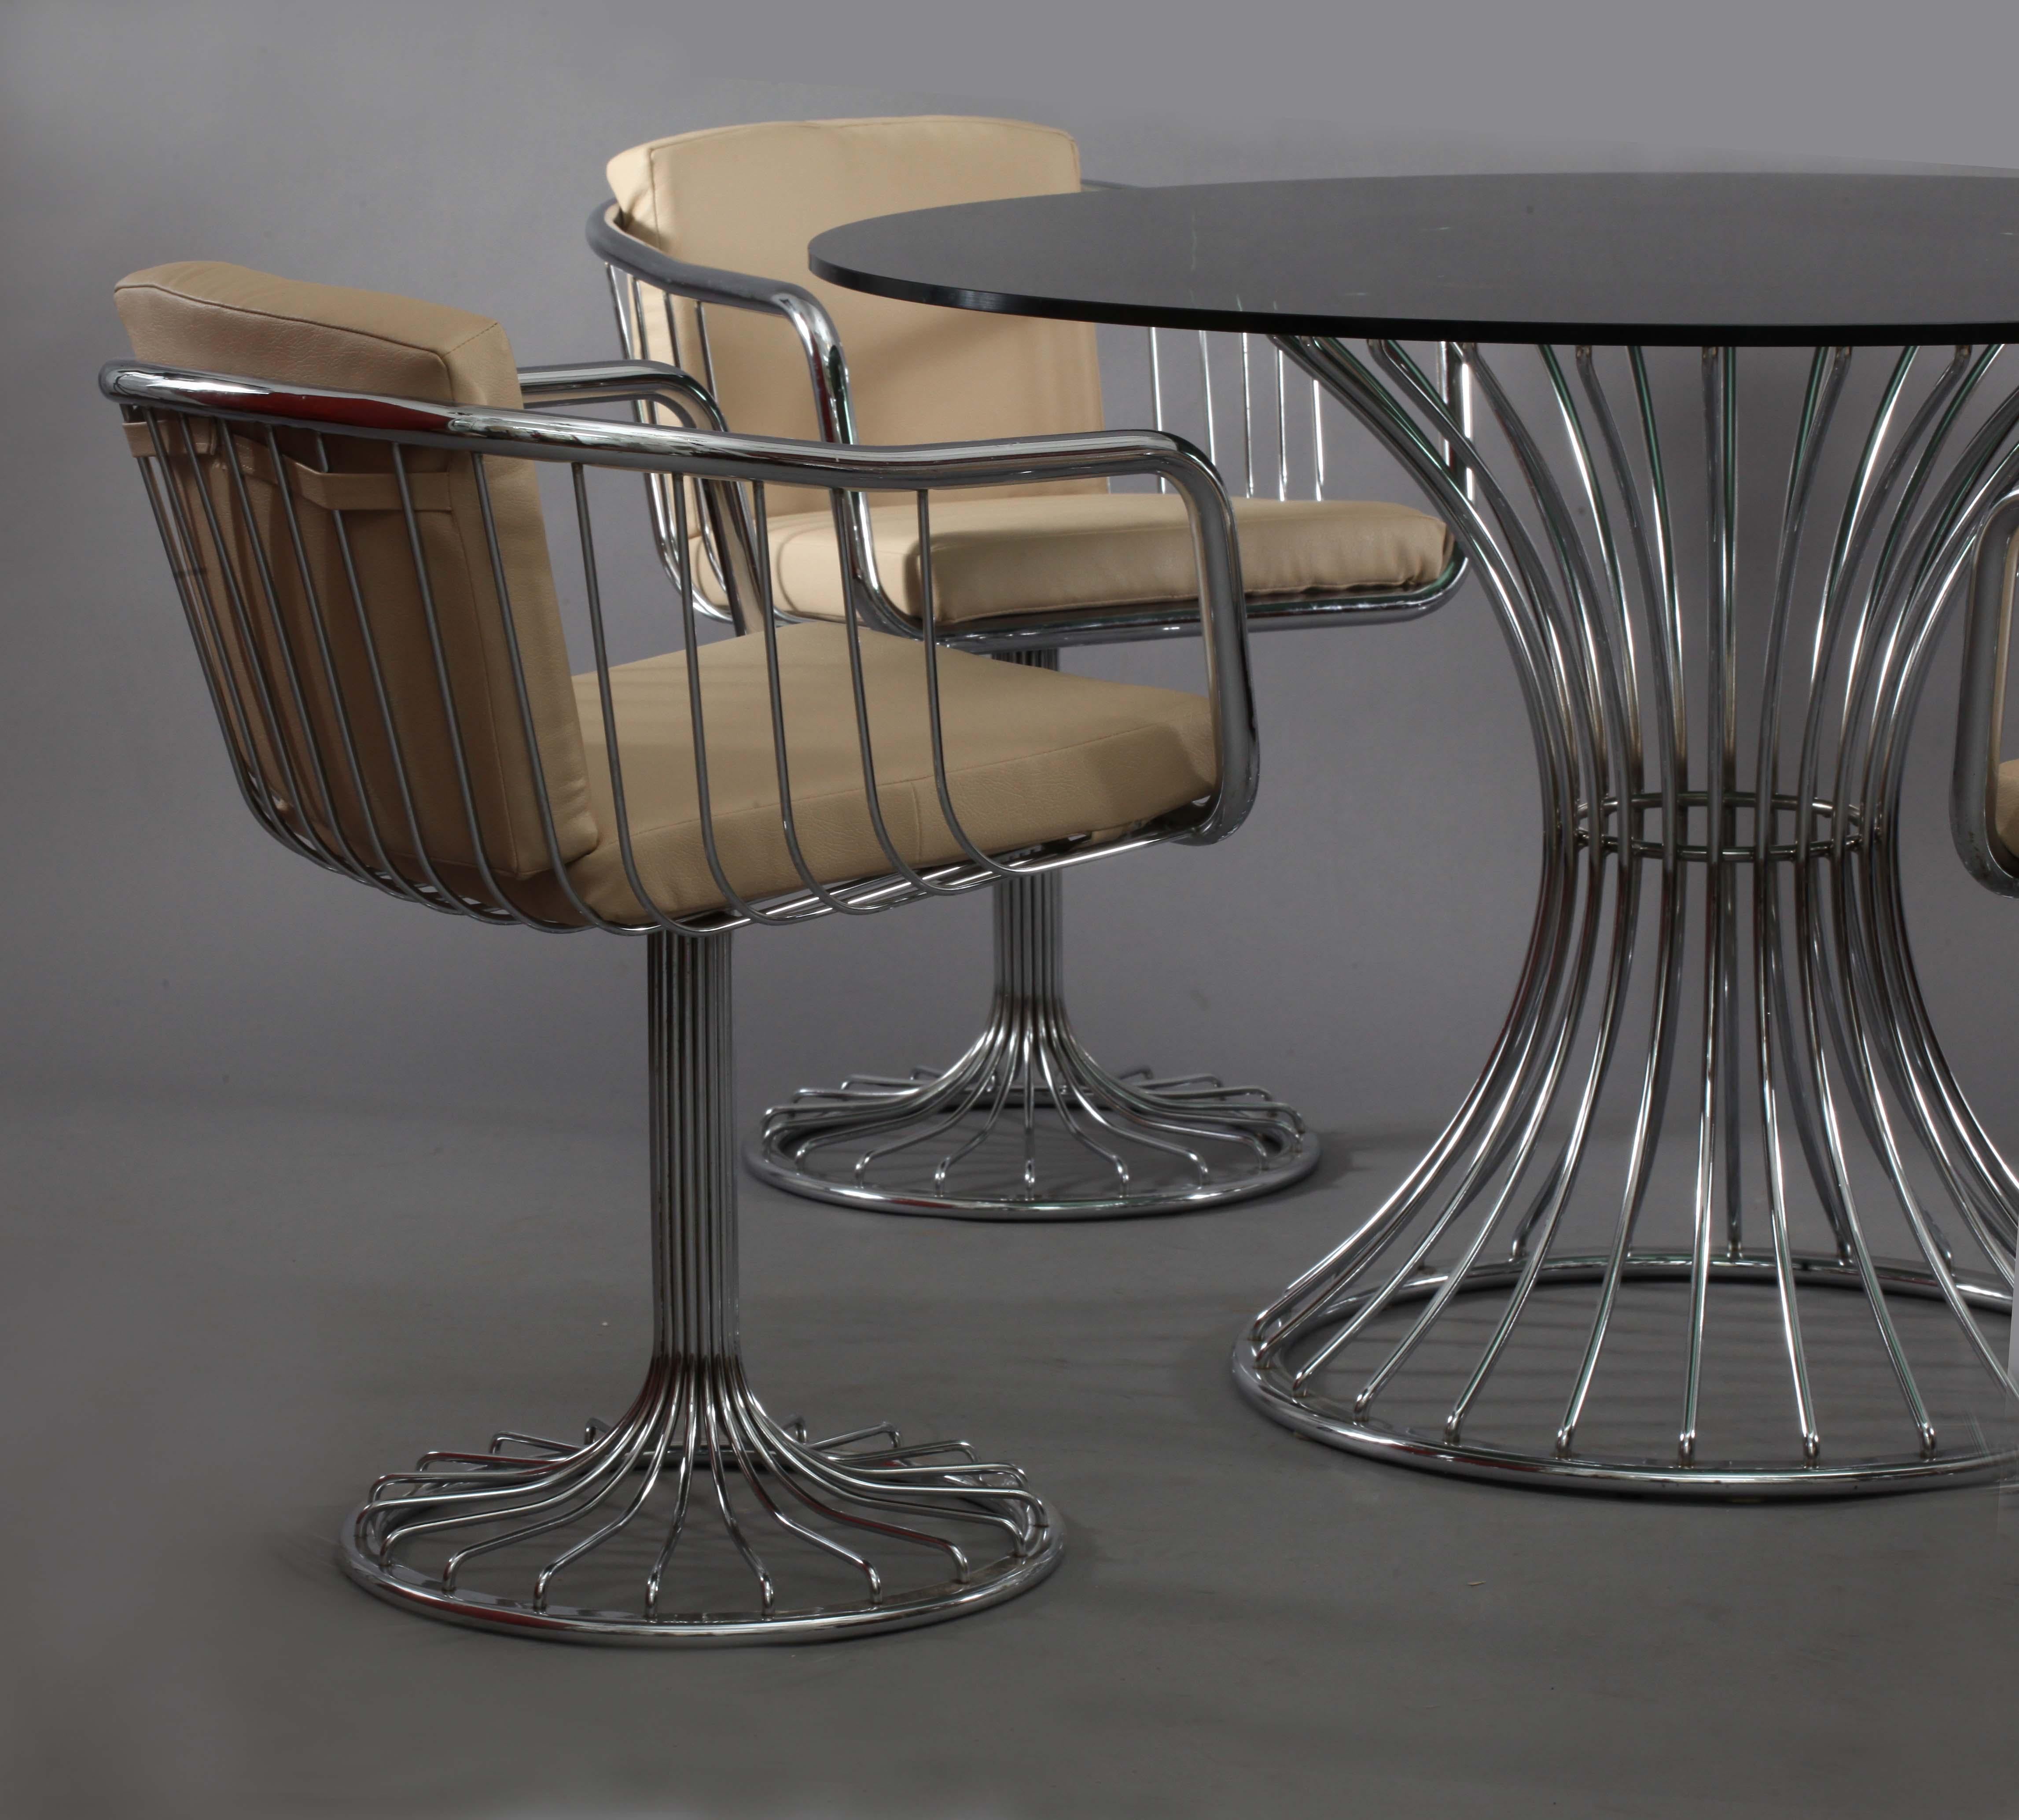 Four chrome armchairs and table
Rinaldi Gastone
Italy 1970
Chrome, leatherette seat,
Smoke glass plate diameter 110cm.